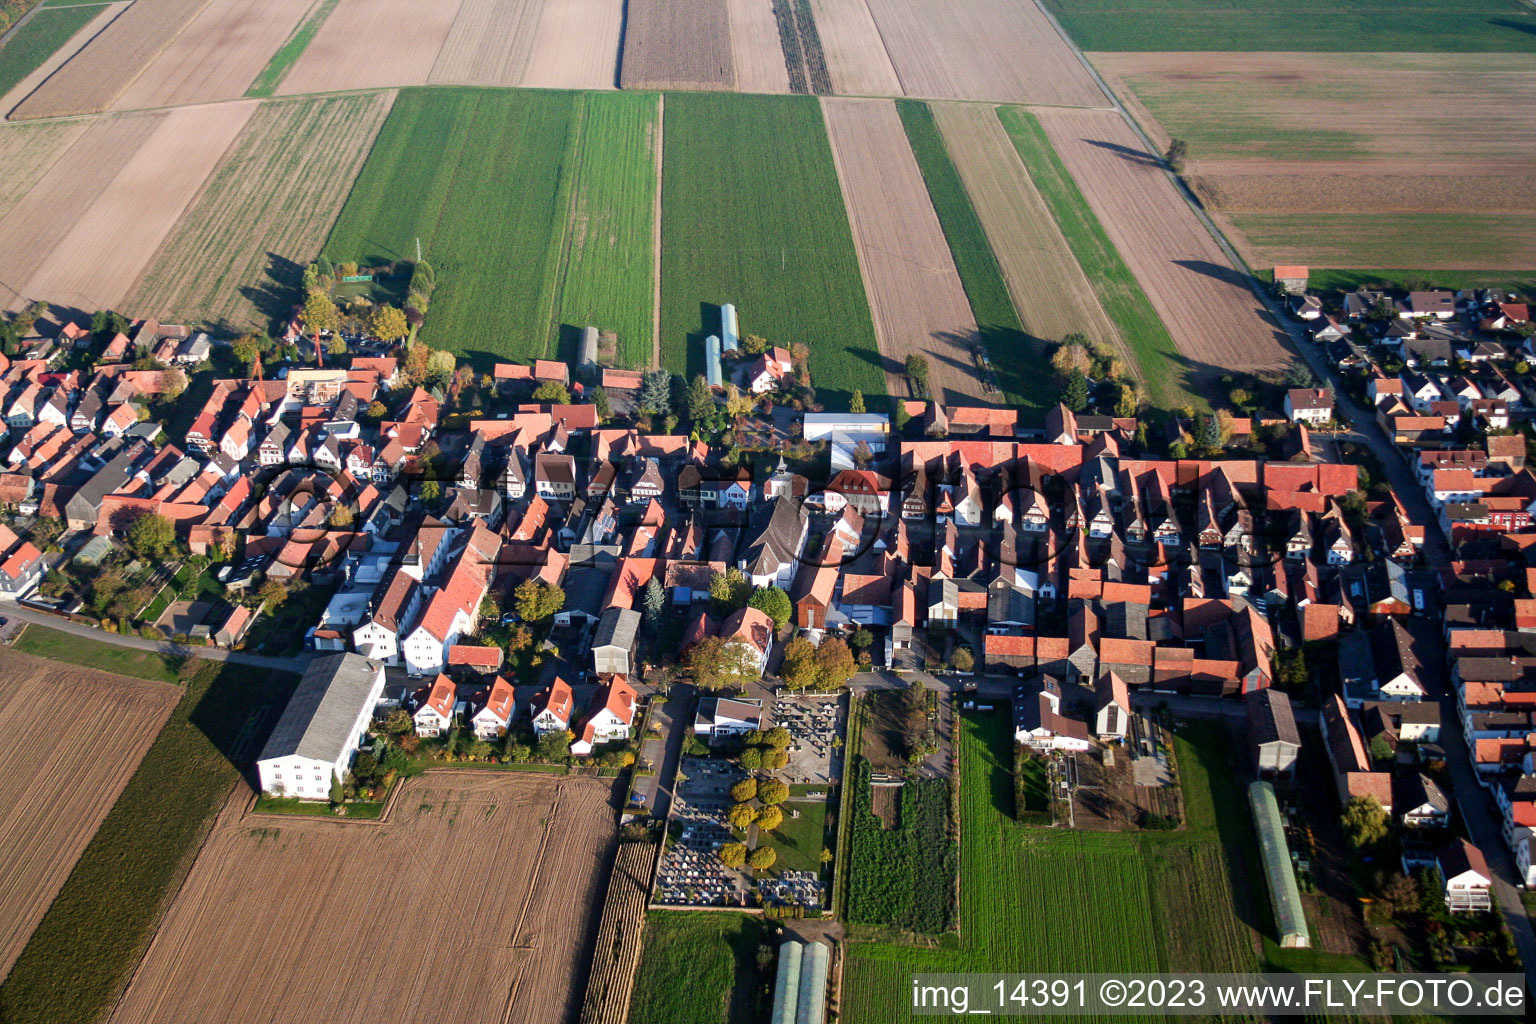 District Hayna in Herxheim bei Landau/Pfalz in the state Rhineland-Palatinate, Germany seen from above